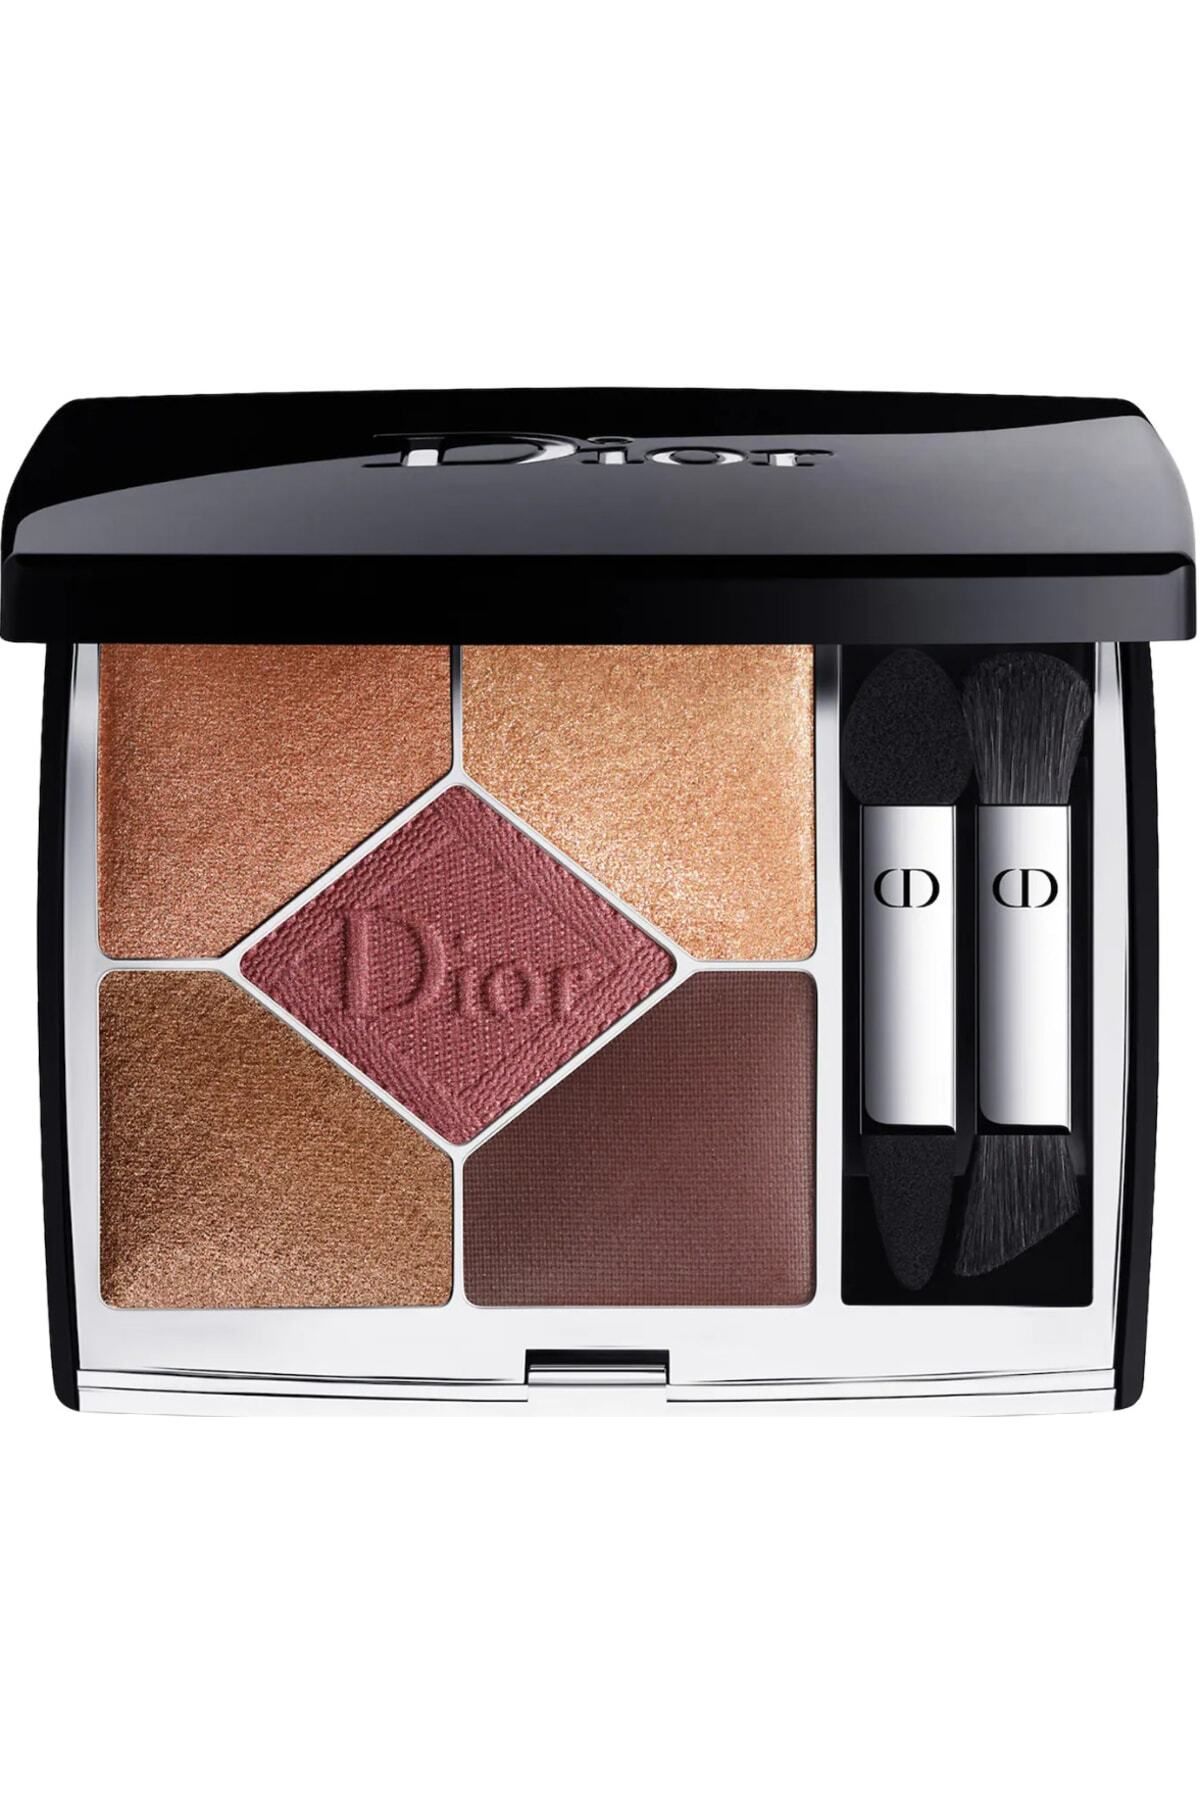 Dior Aloe Vera ve Çam Yağı İçerikli 5 Couleurs Couture Eyeshadow Palette